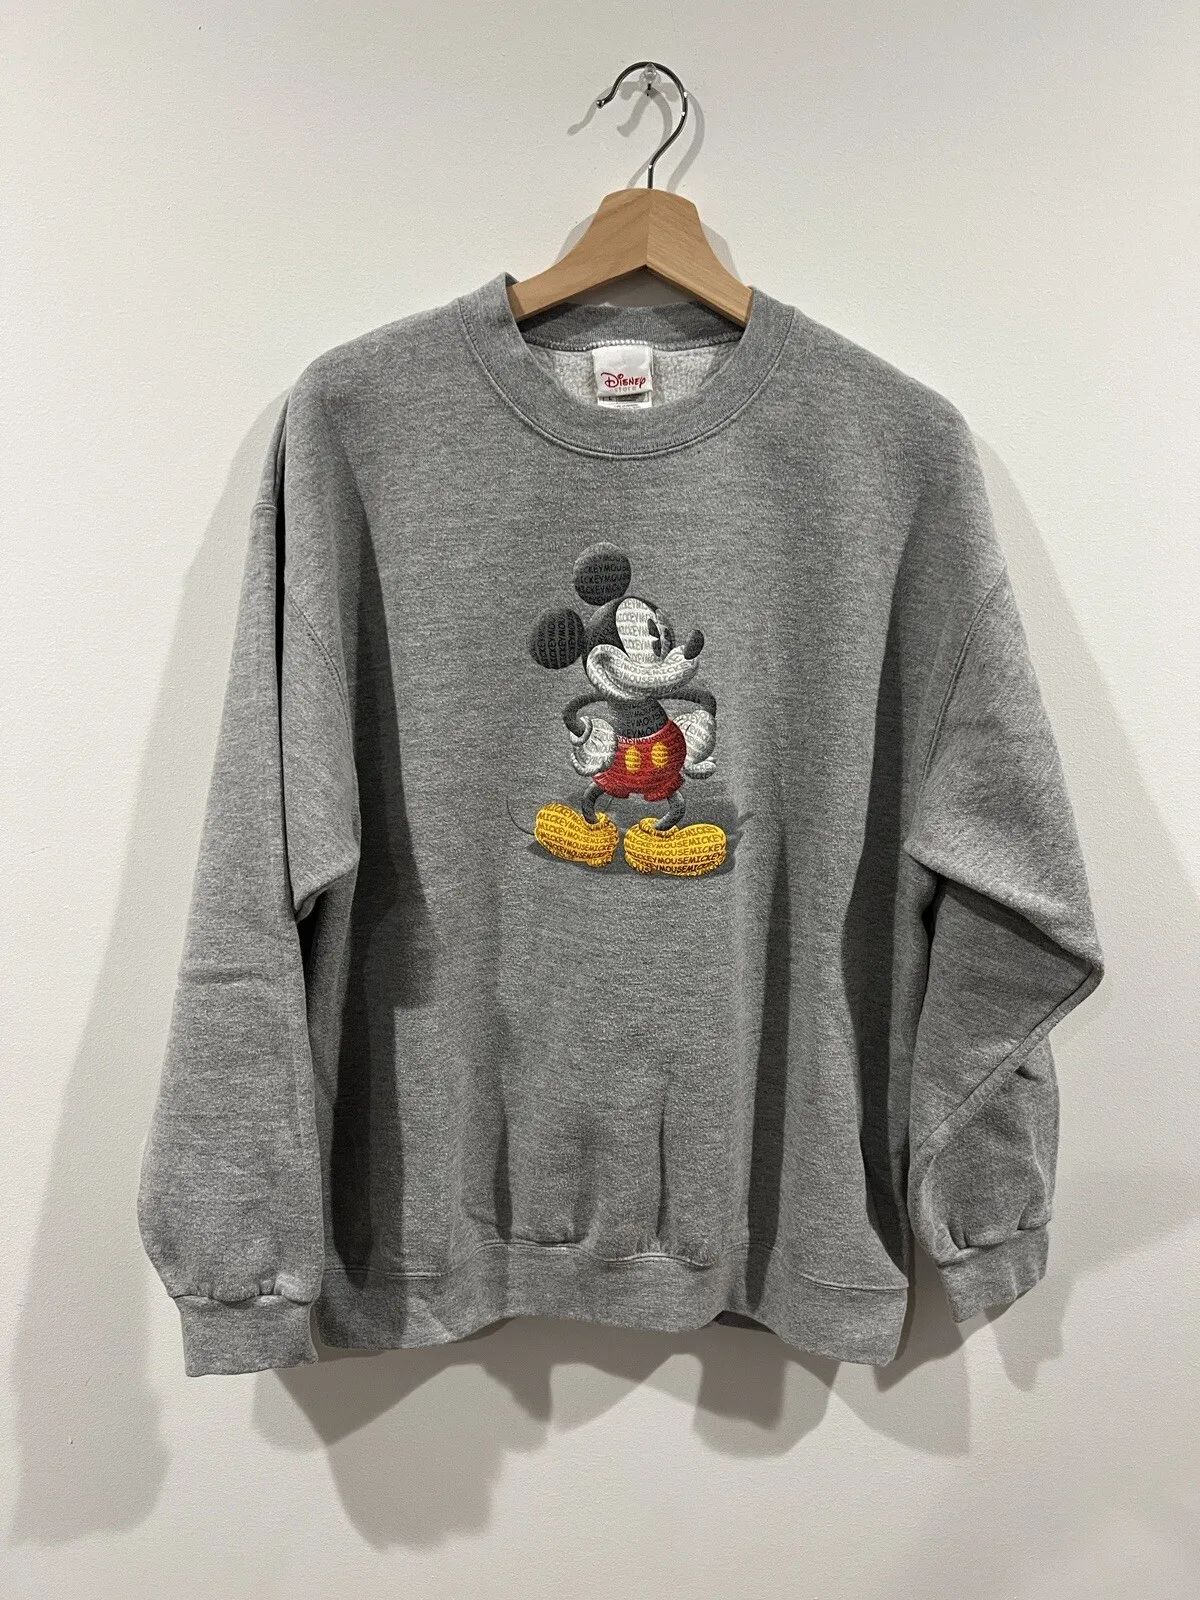 Disney Store Mickey Mouse Crewneck Sweatshirt Gray Large | eBay US